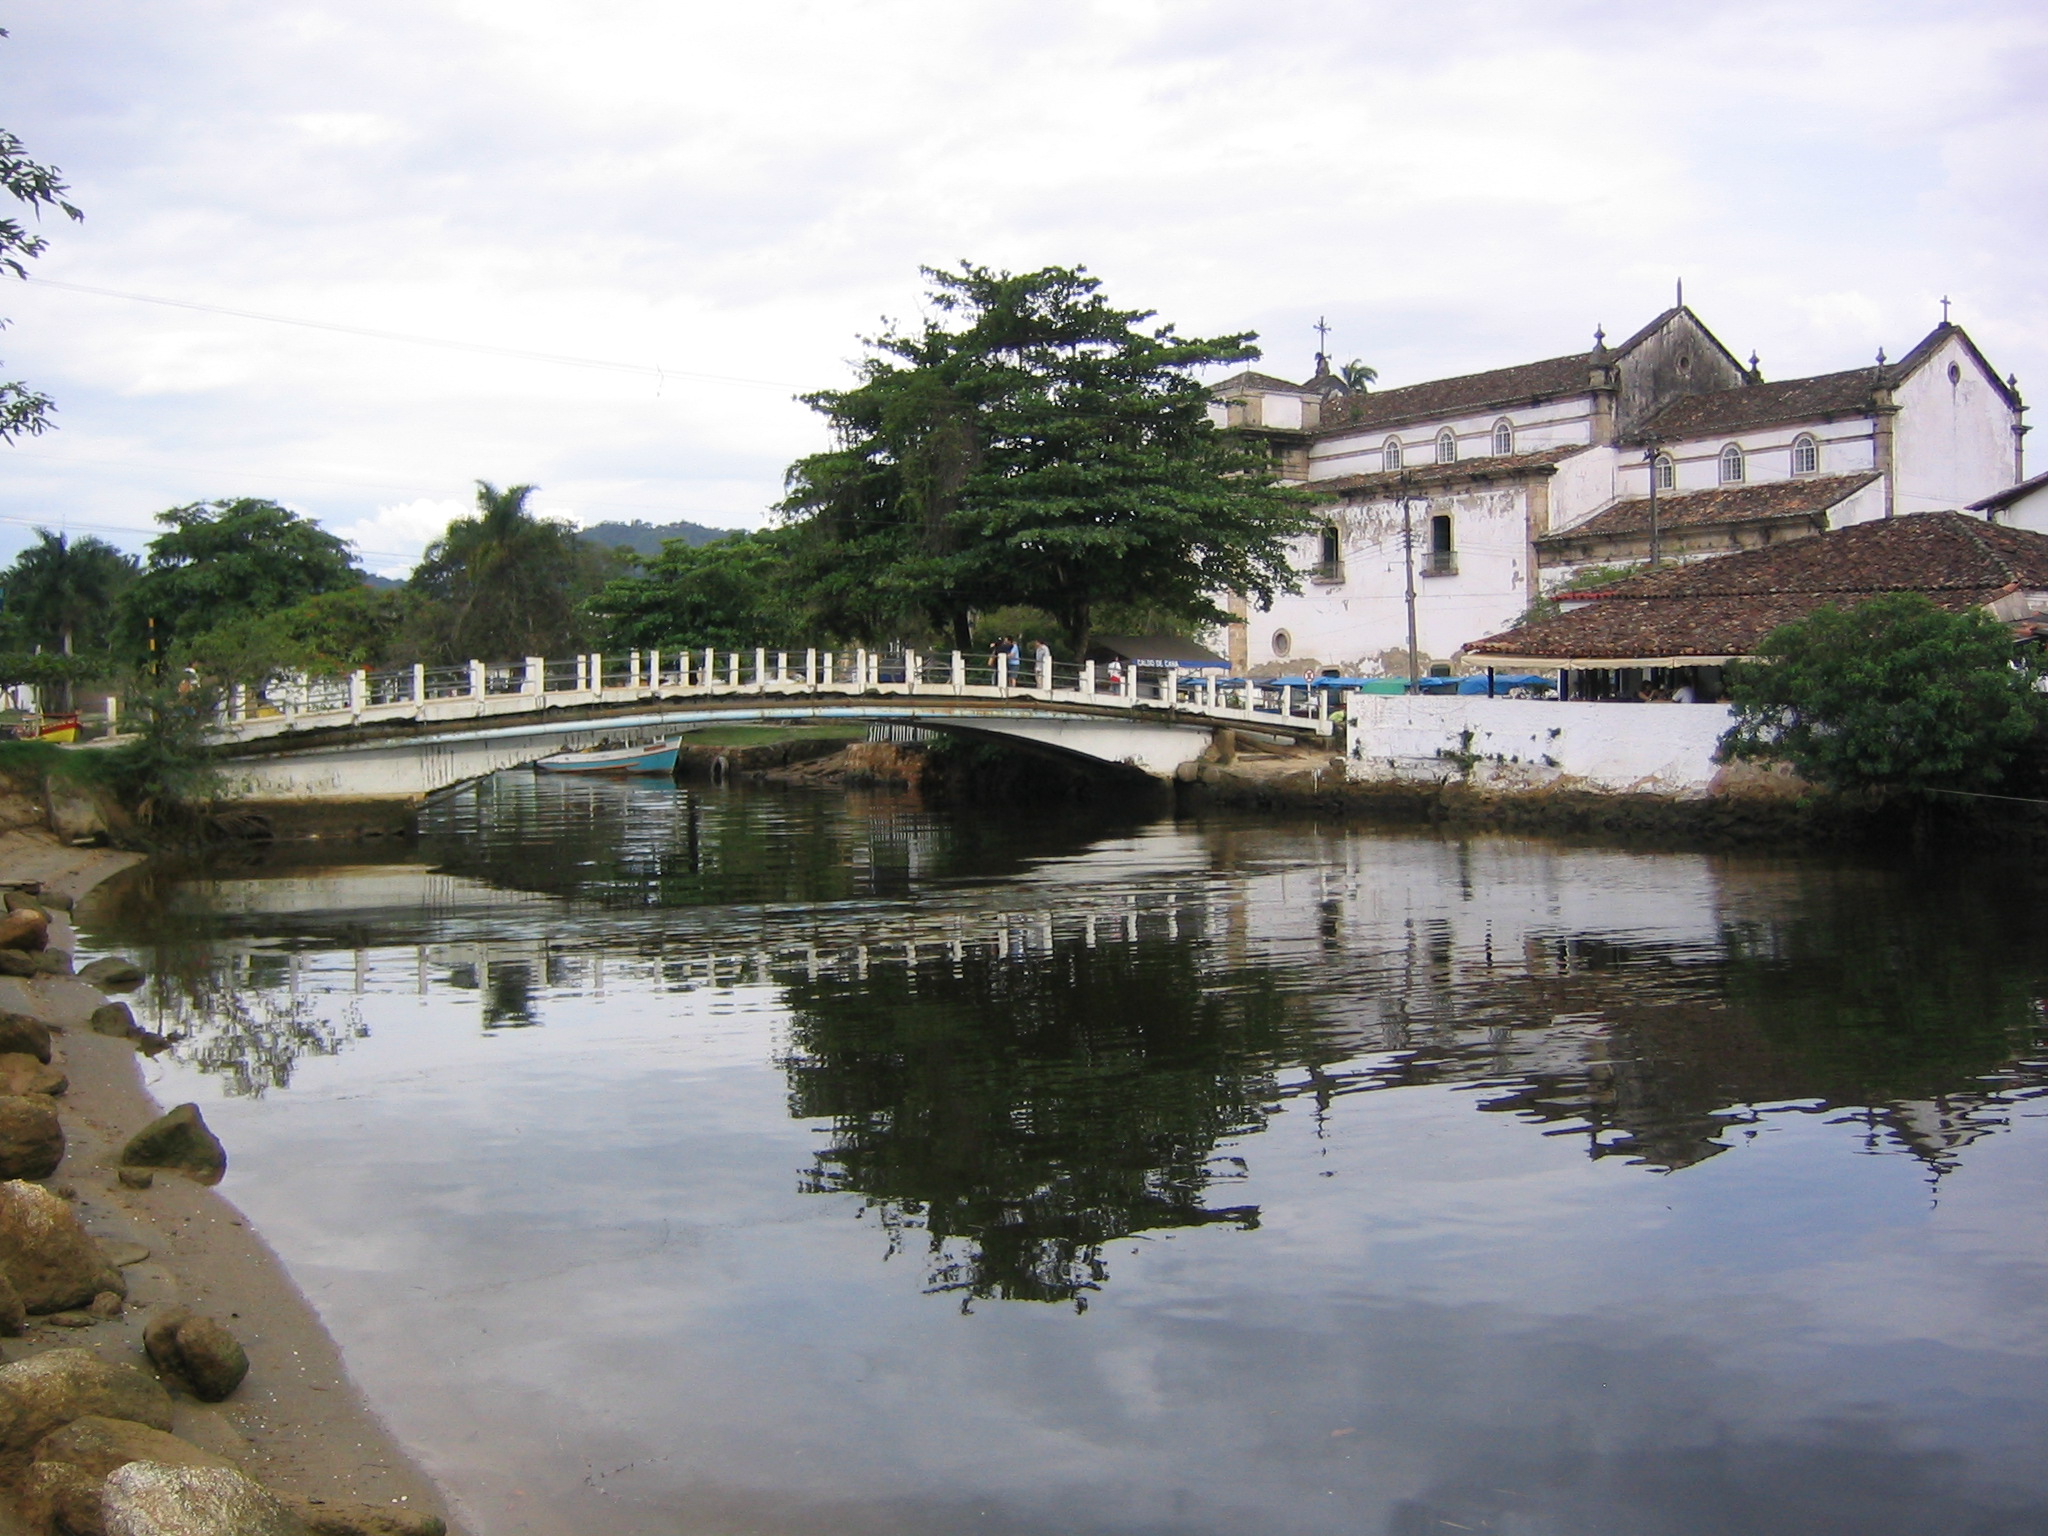 a bridge crossing over a calm river in the city